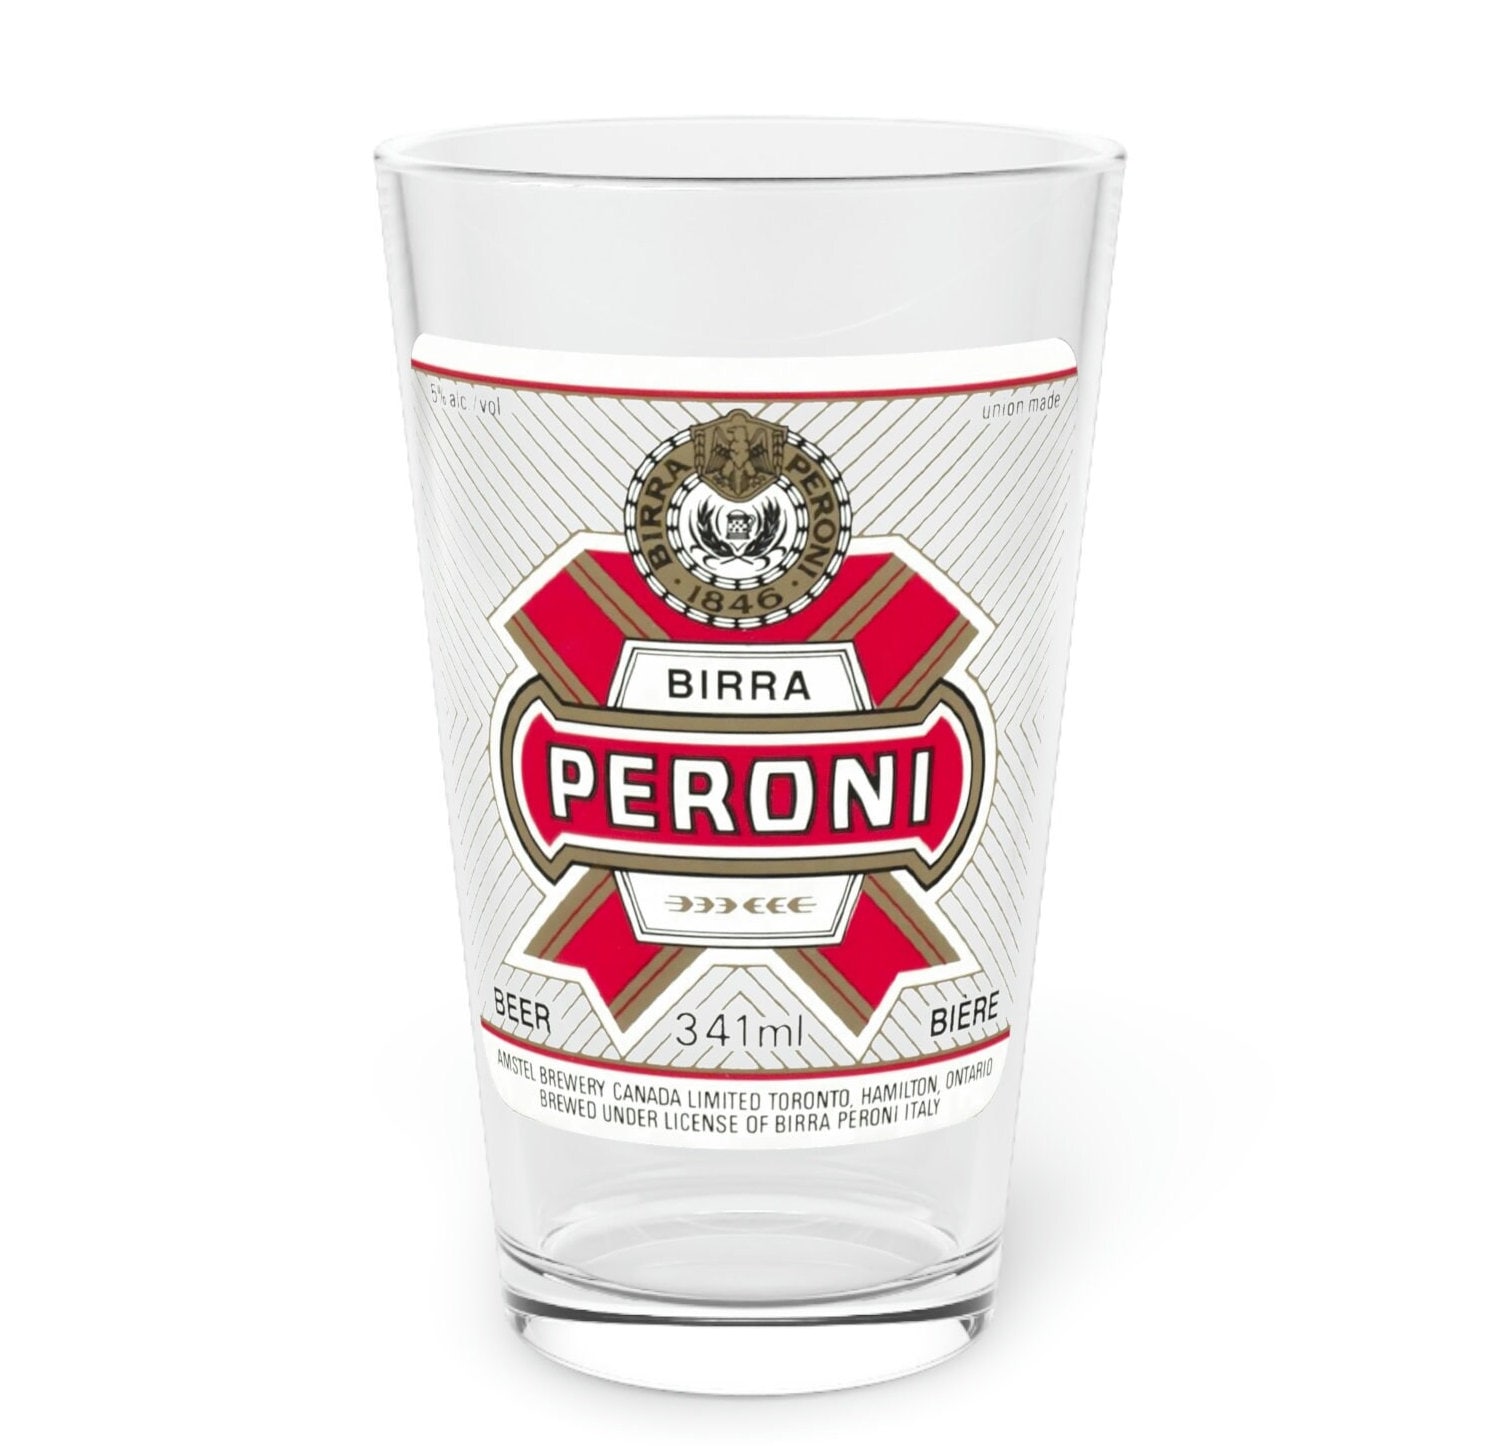 Birra Peroni Biere, Pint Bar Beer Glass, Toronto, Hamilton, Ontario, Canada  